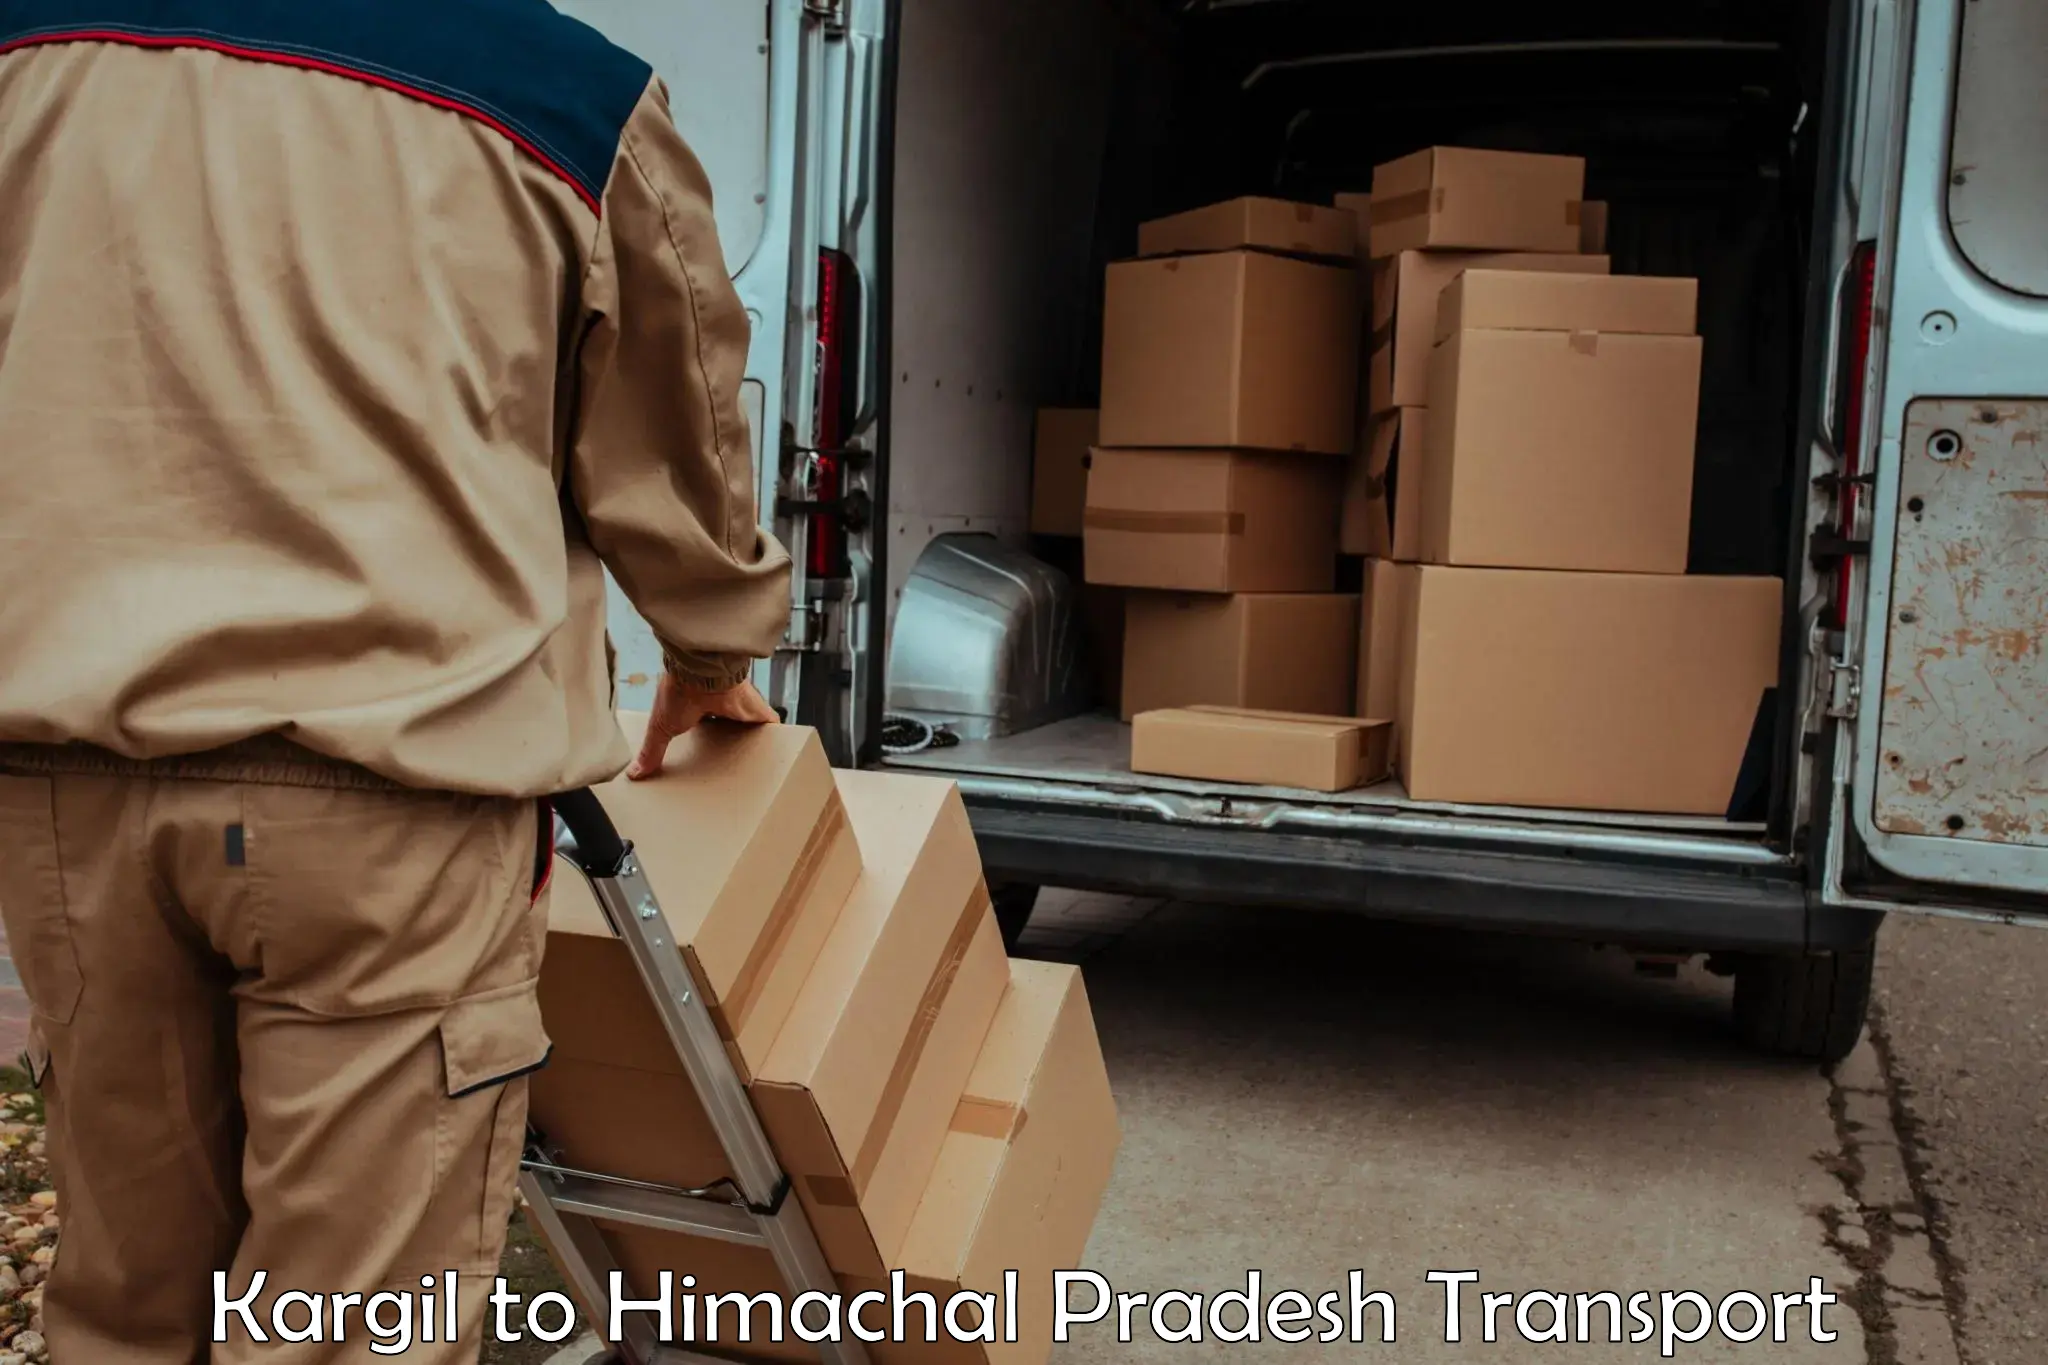 Truck transport companies in India Kargil to Kotkhai